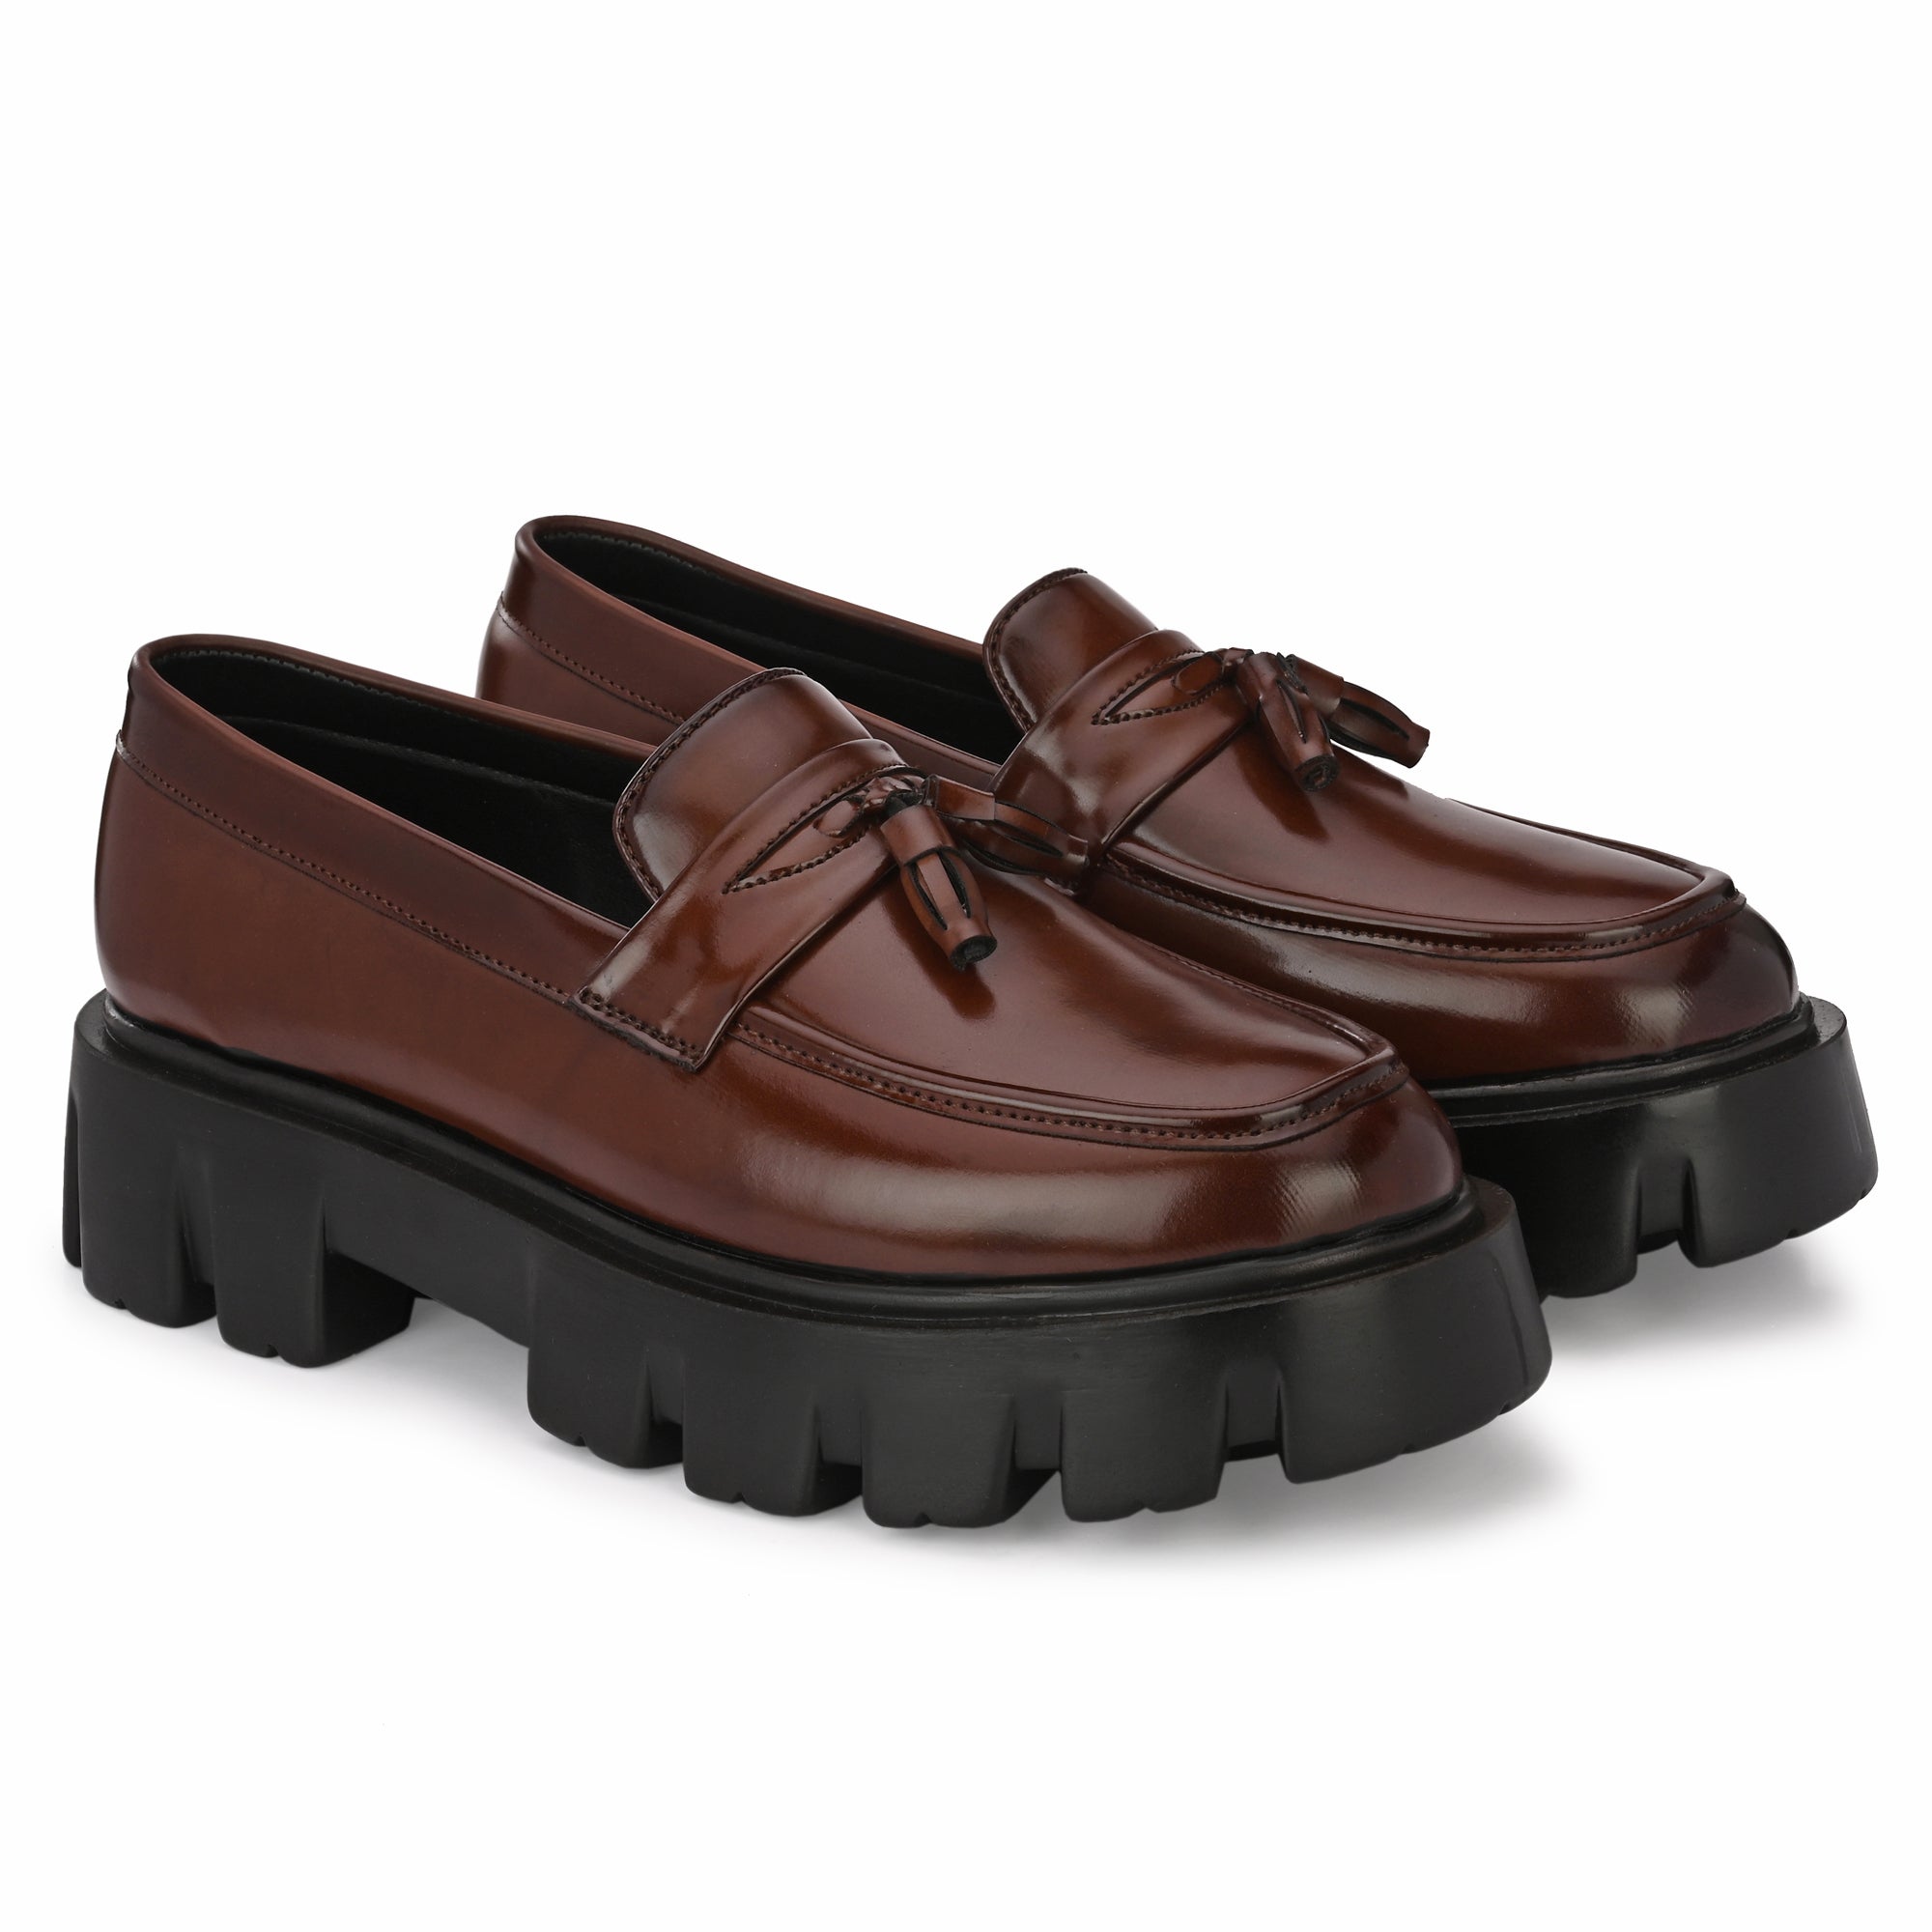 attitudist-glossy-brown-high-heel-tassel-loafers-for-men